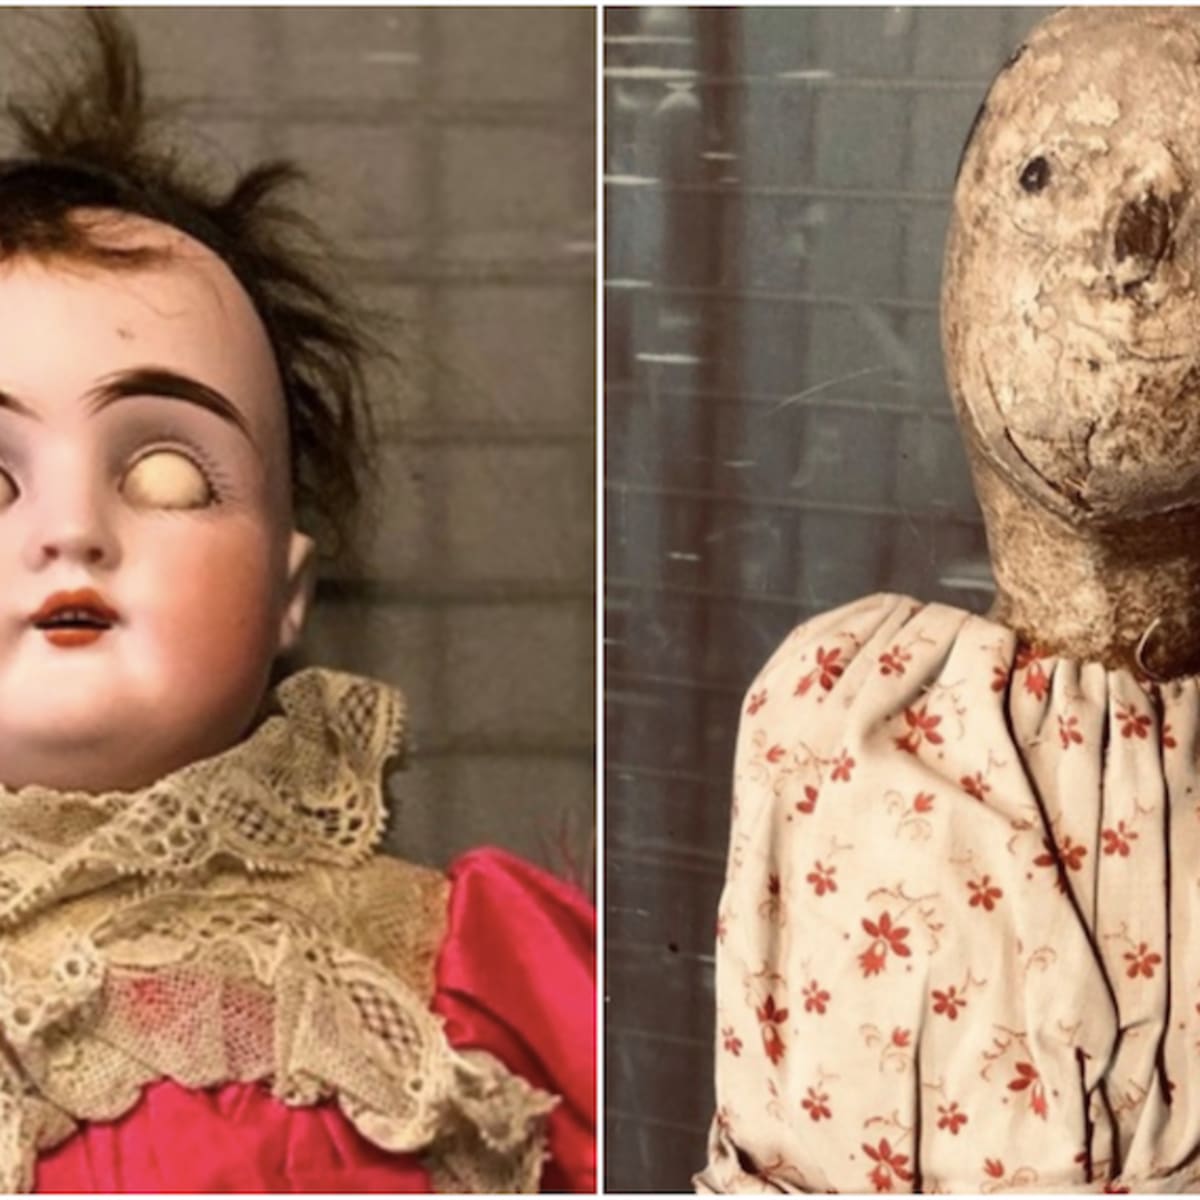 show me a creepy doll